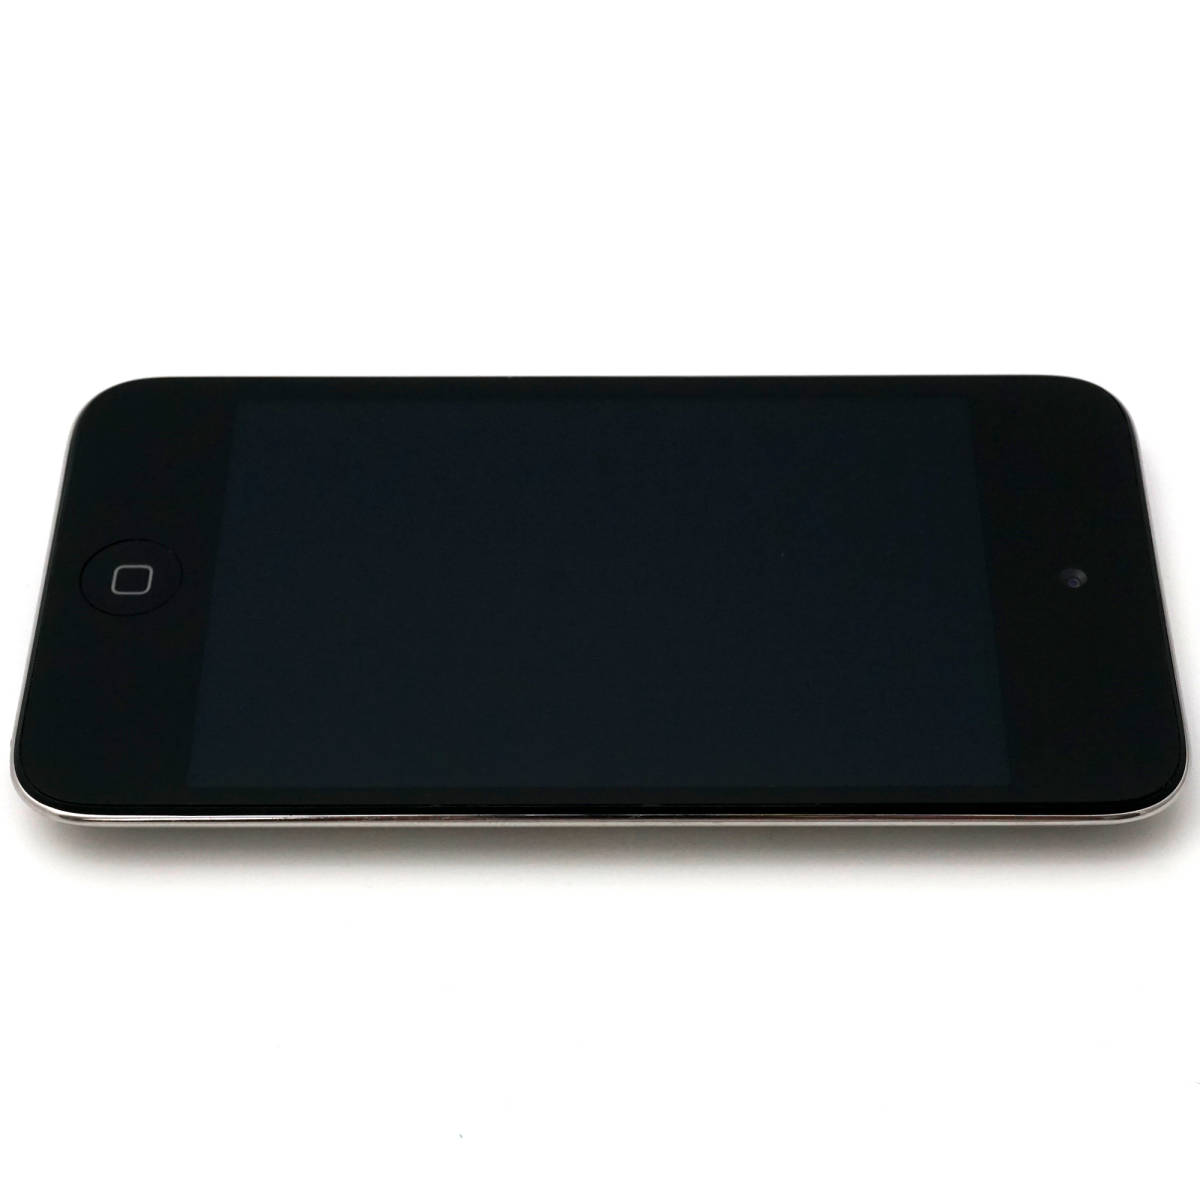 APPLE iPod touch 4 32GB черный A1367 MC544J/A Apple iPod Touch no. 4 поколение 